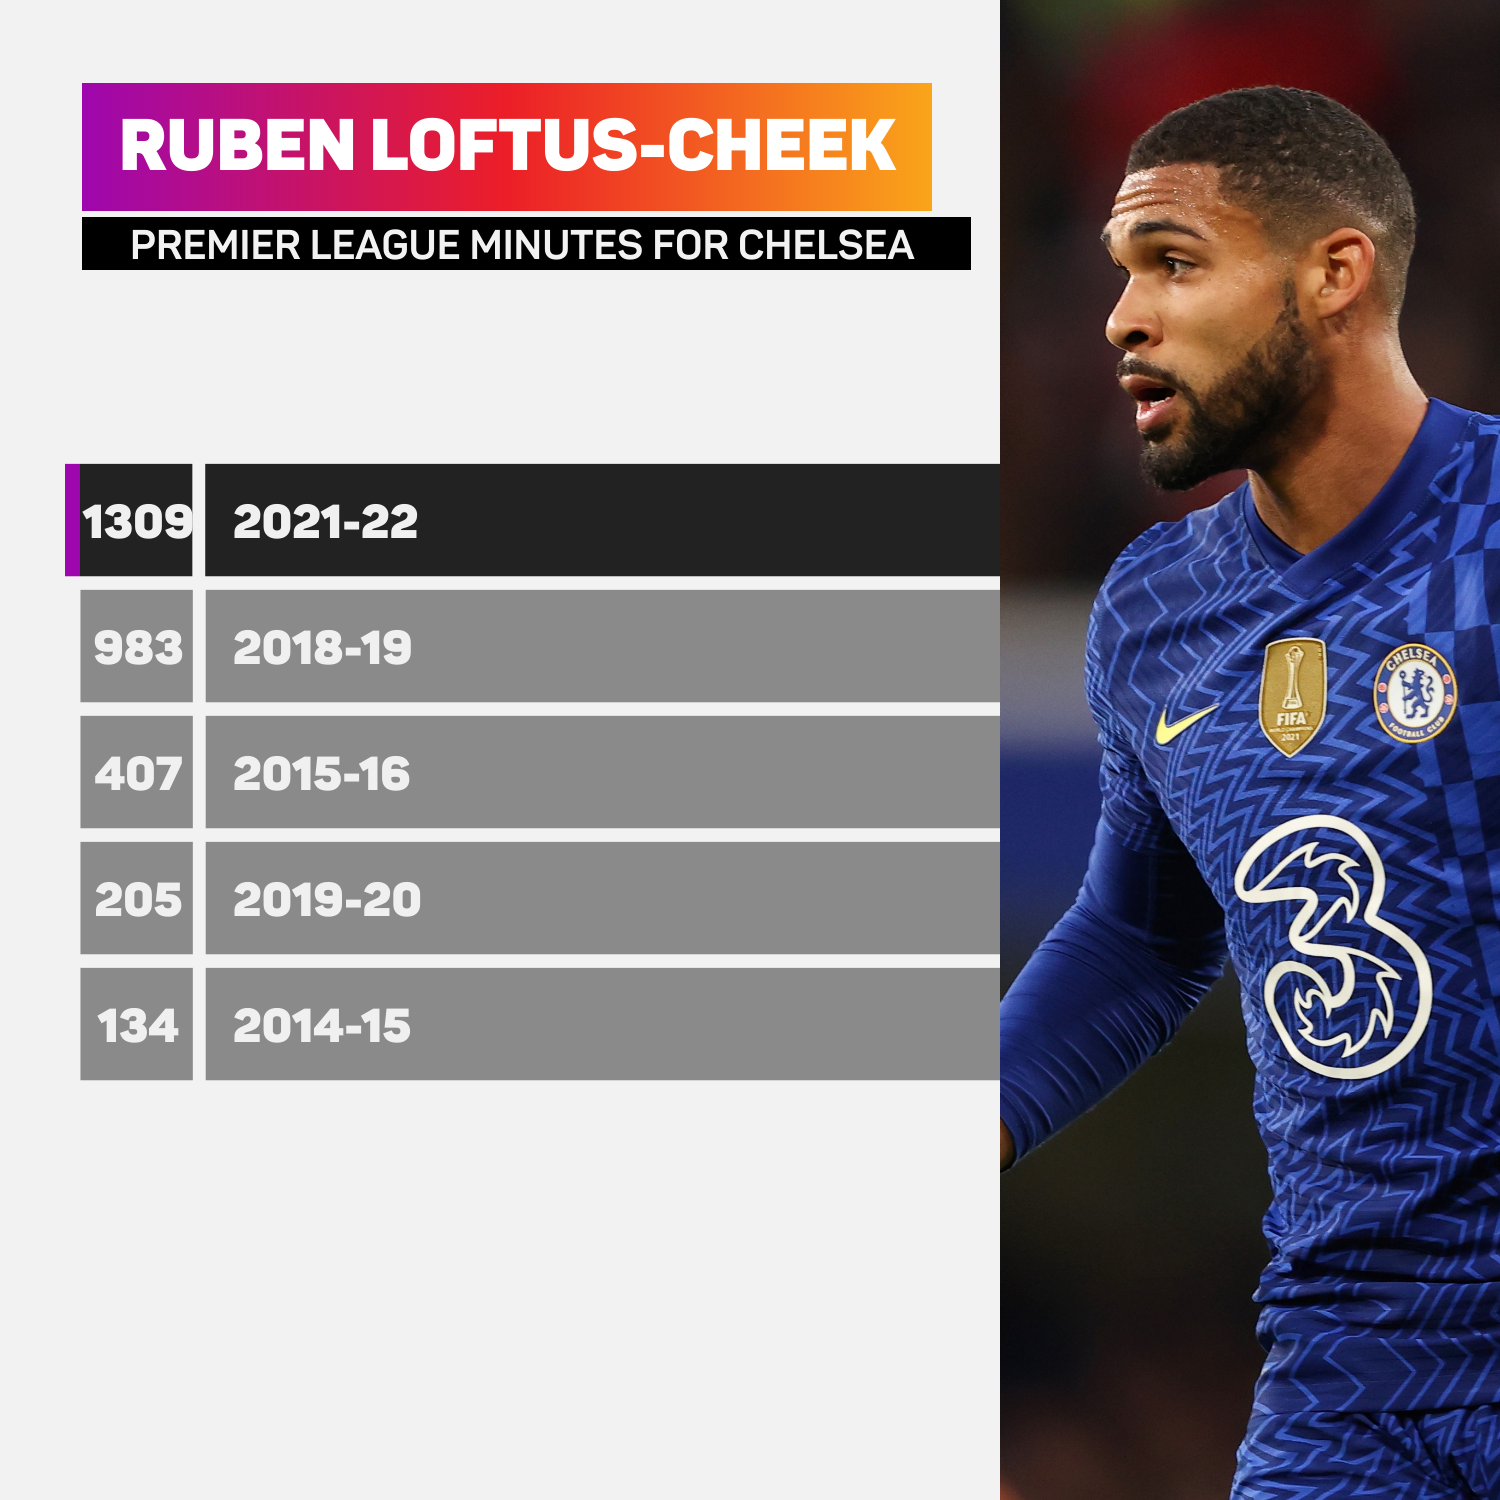 Ruben Loftus-Cheek's Chelsea Premier League minutes